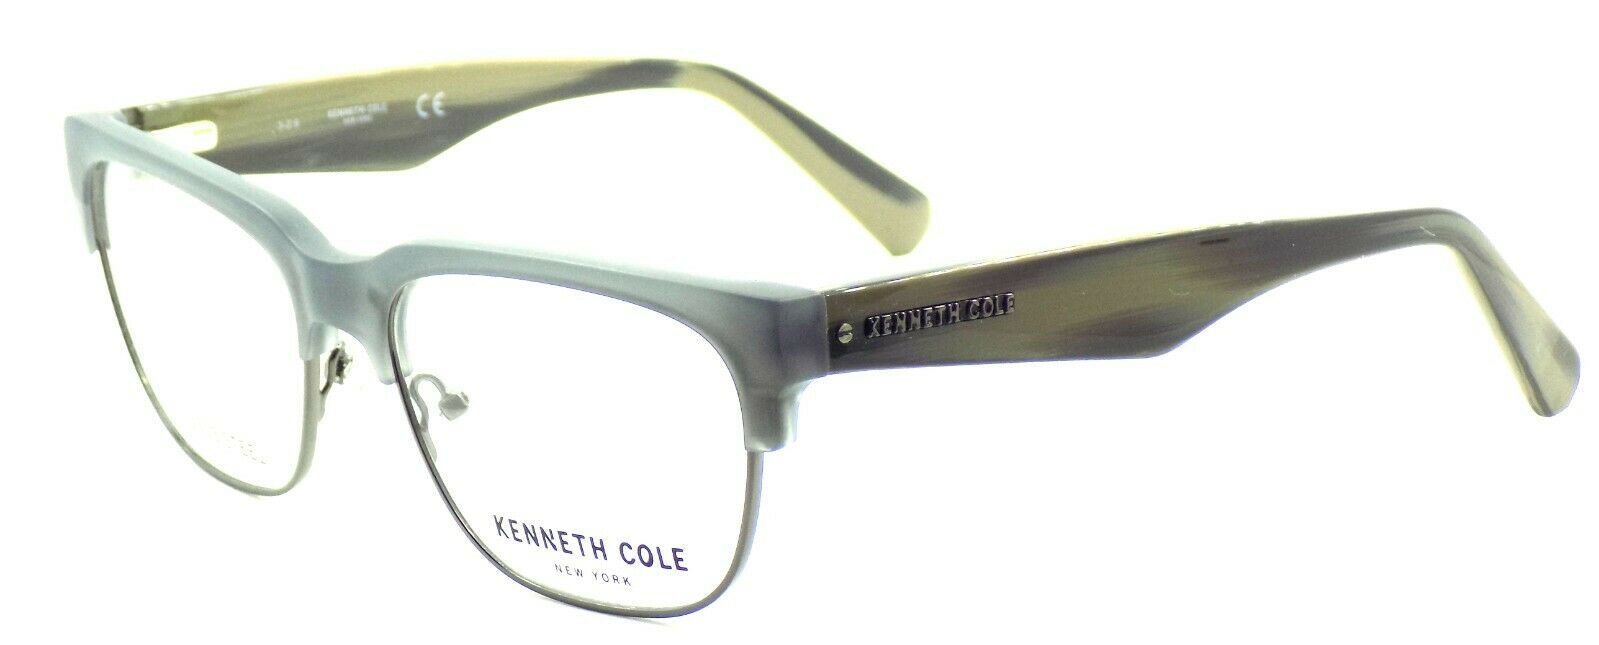 1-Kenneth Cole NY KC0257 020 Men's Eyeglasses Frames 53-16-140 Gray + CASE-664689888719-IKSpecs